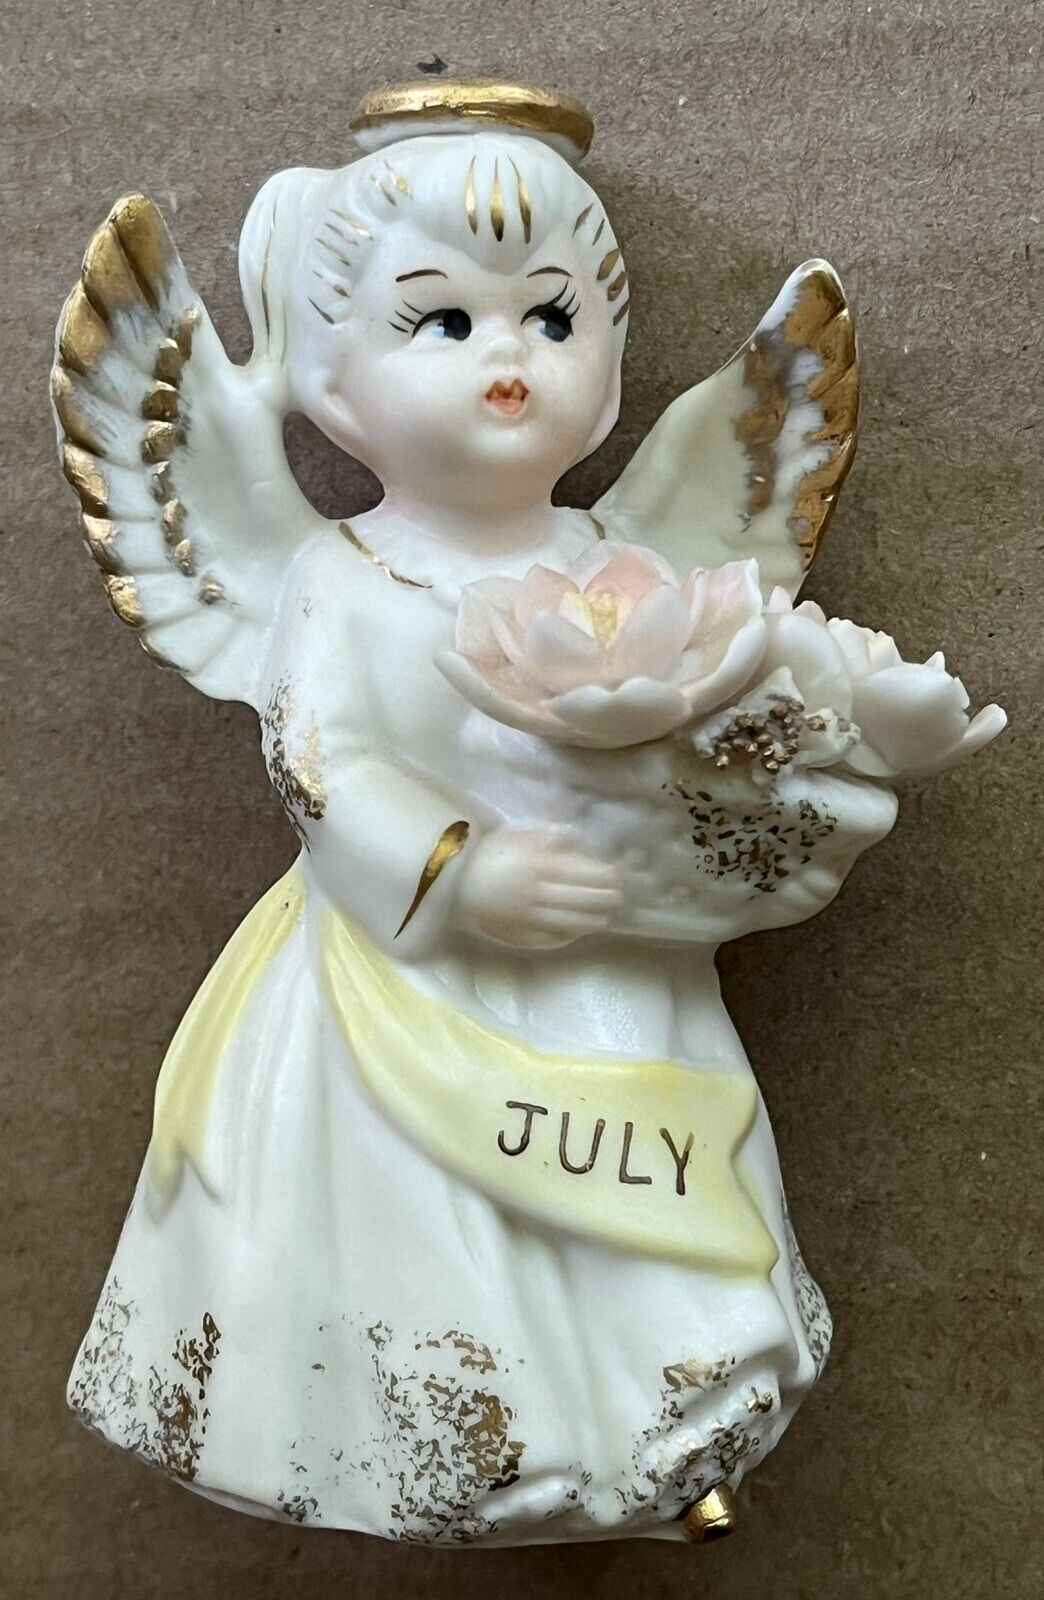 VTG Enesco July Angel Birthday Figurine Japan